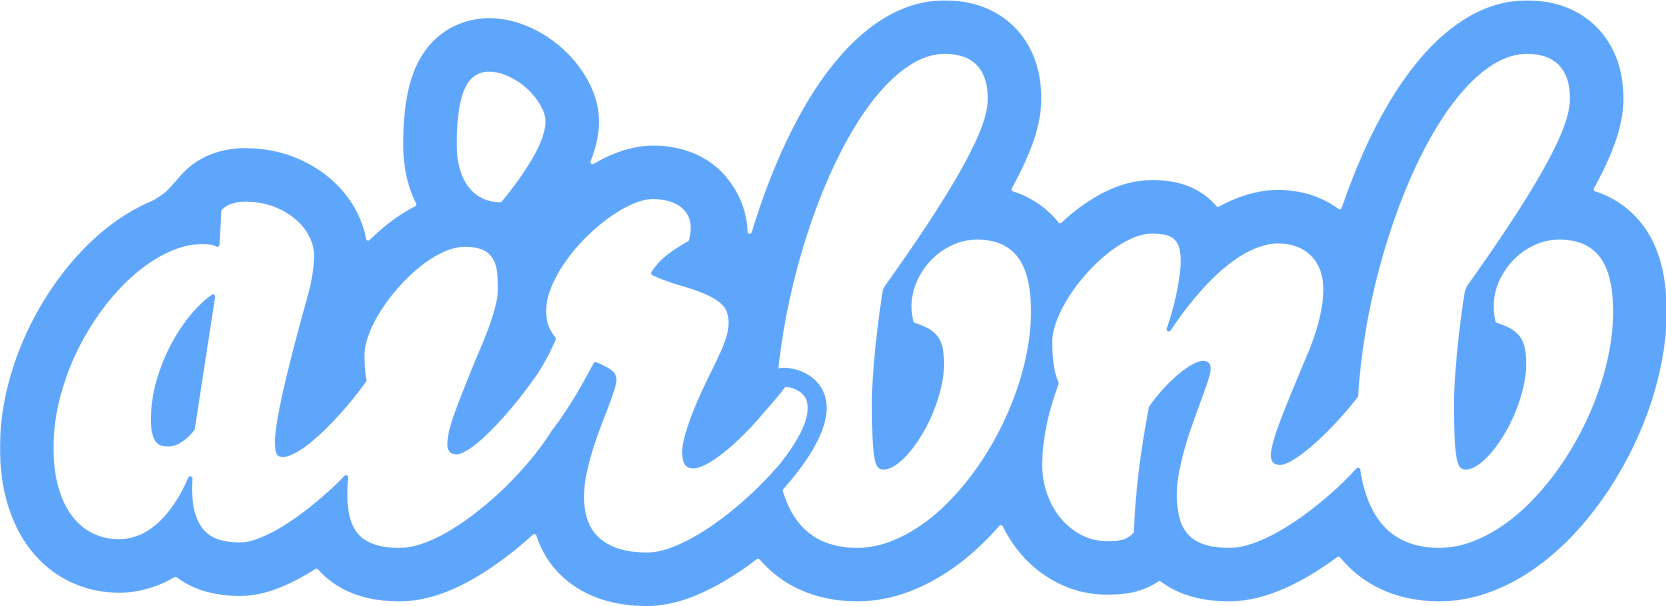 Airbnb_logo_flat